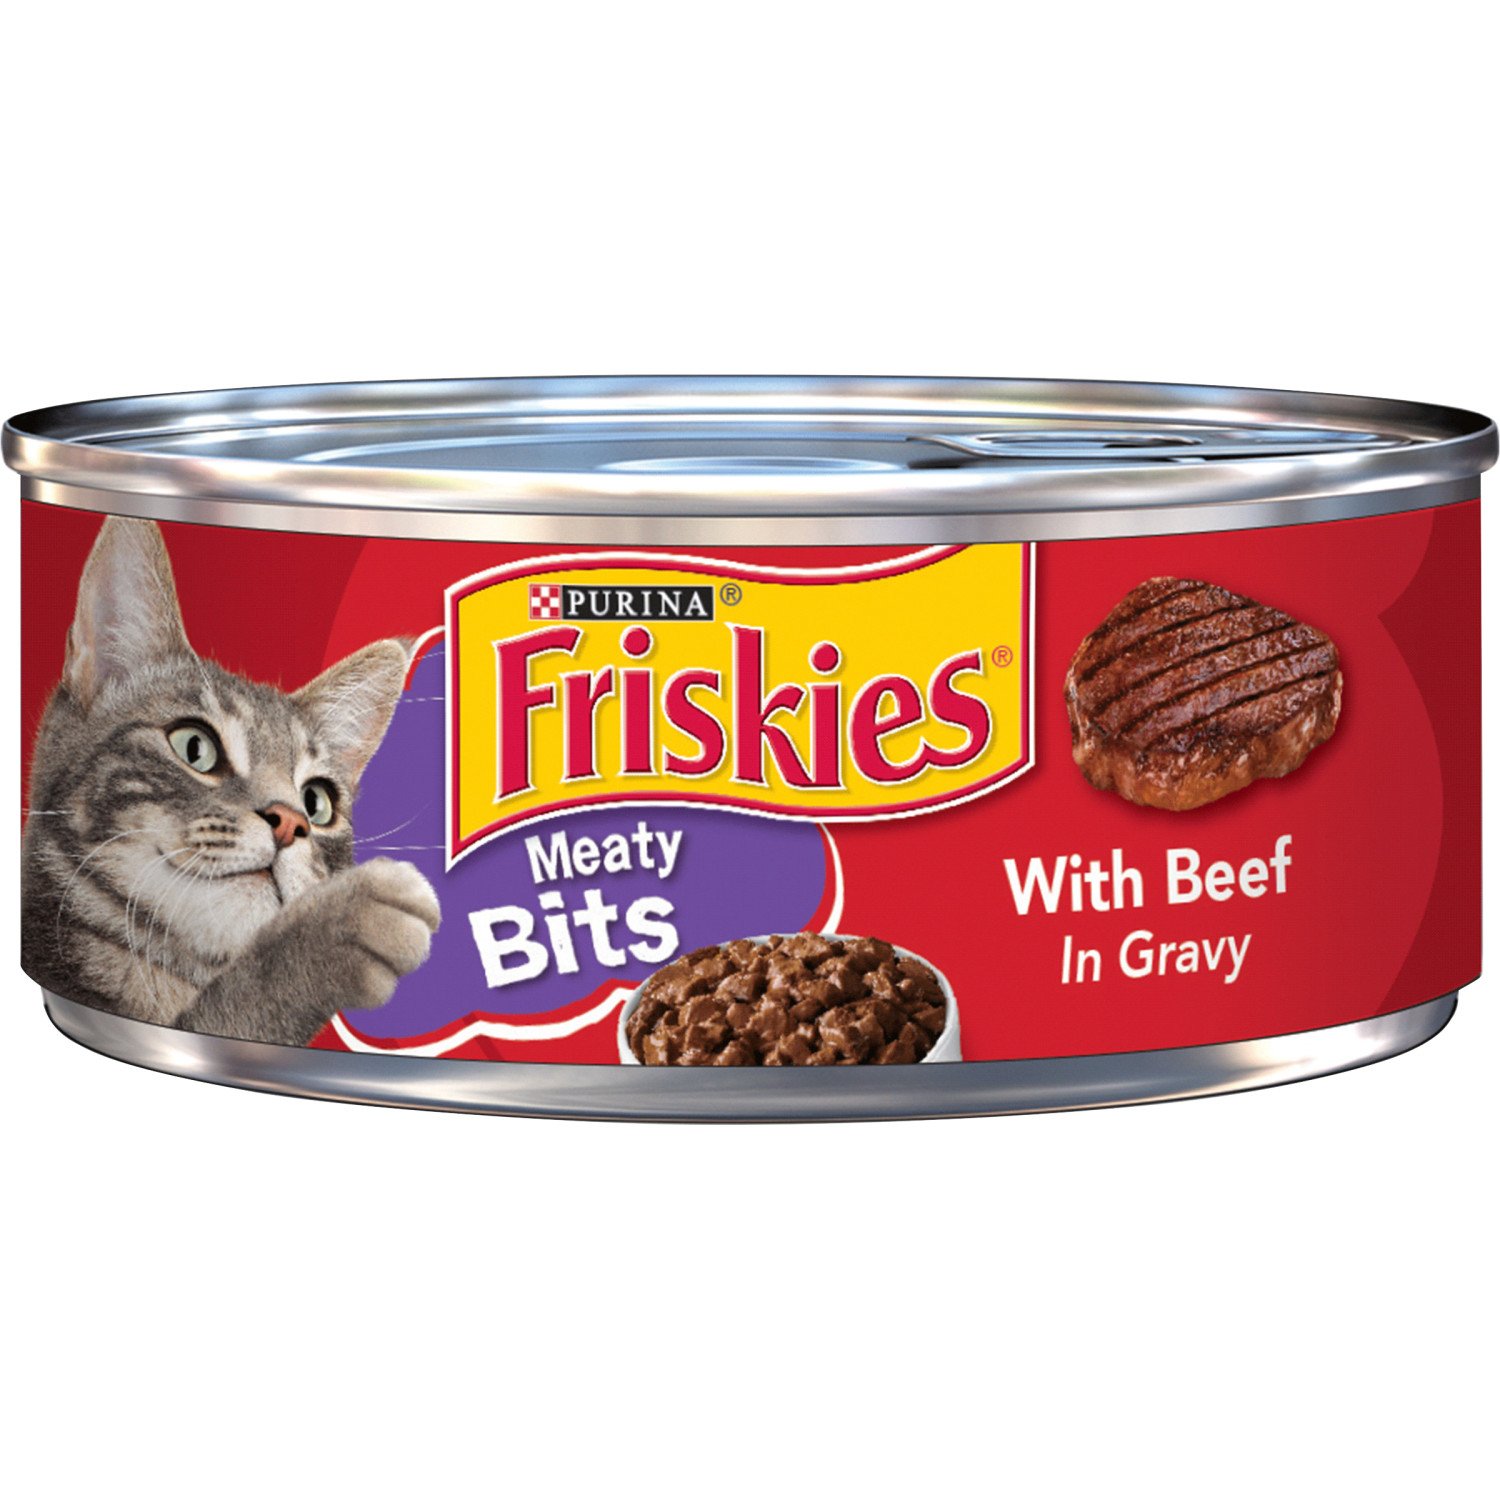 Purina Friskies Meaty Bites with Beef in Gravy Wet Cat Food Shop Cats